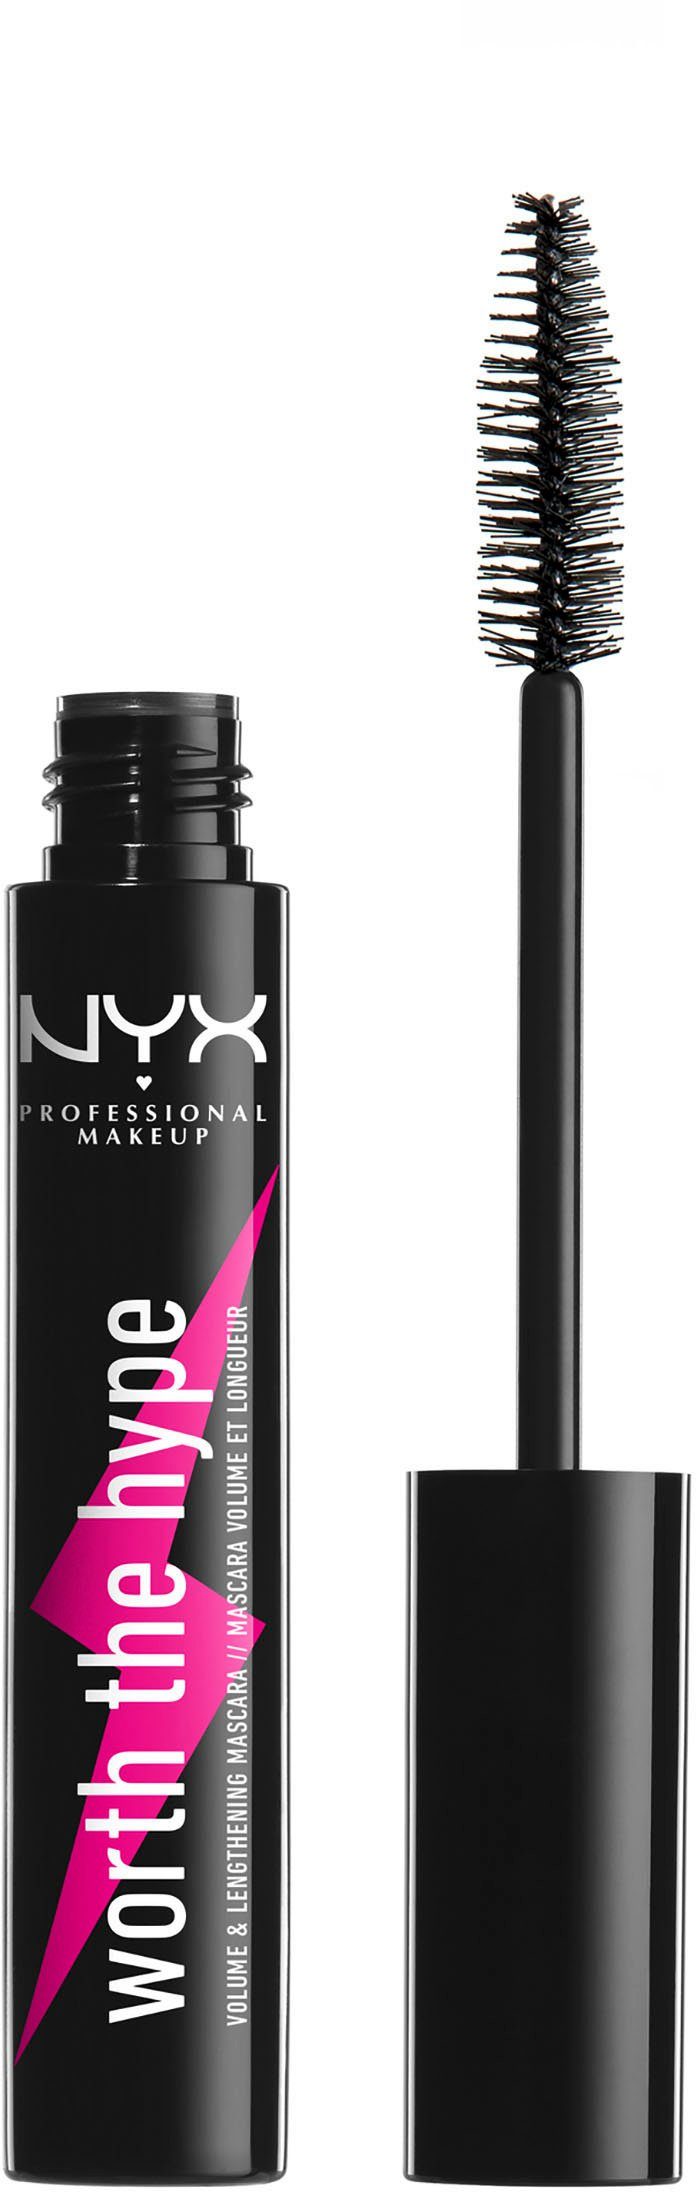 NYX Mascara Professional Makeup The Hype Worth Mascara